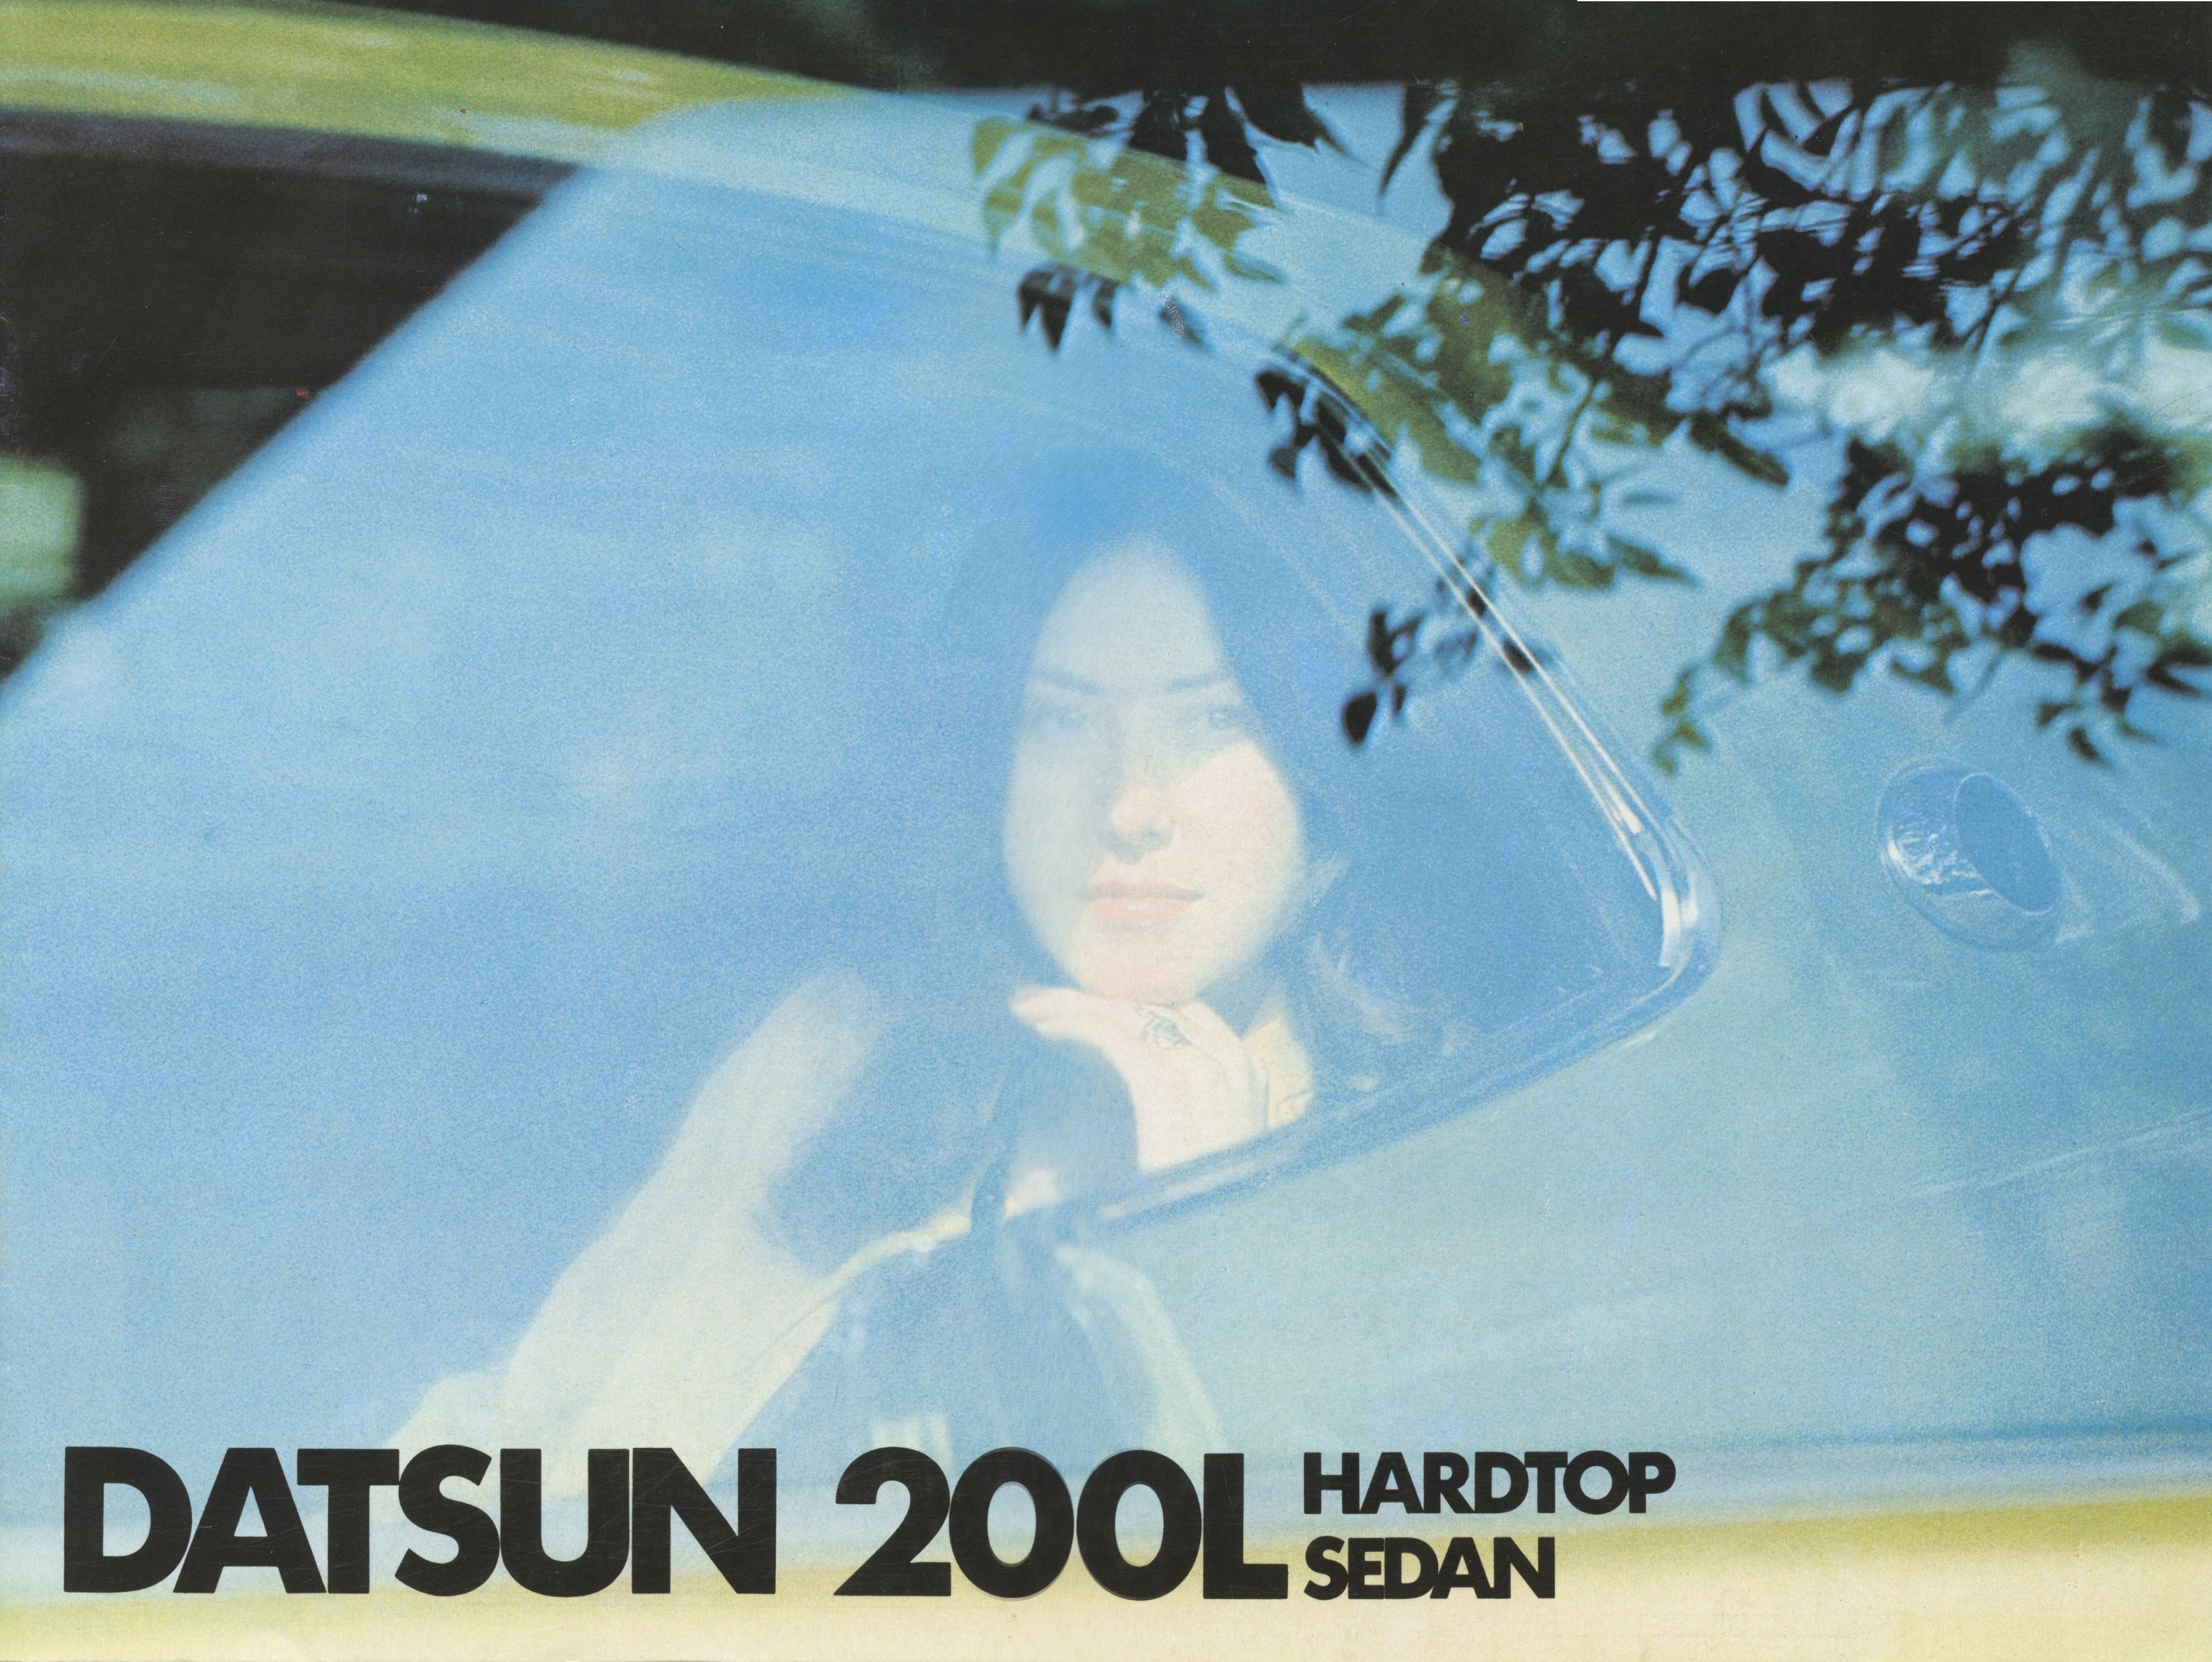 Datsun 200L hardtop en sedan - Dutch brochure - cover